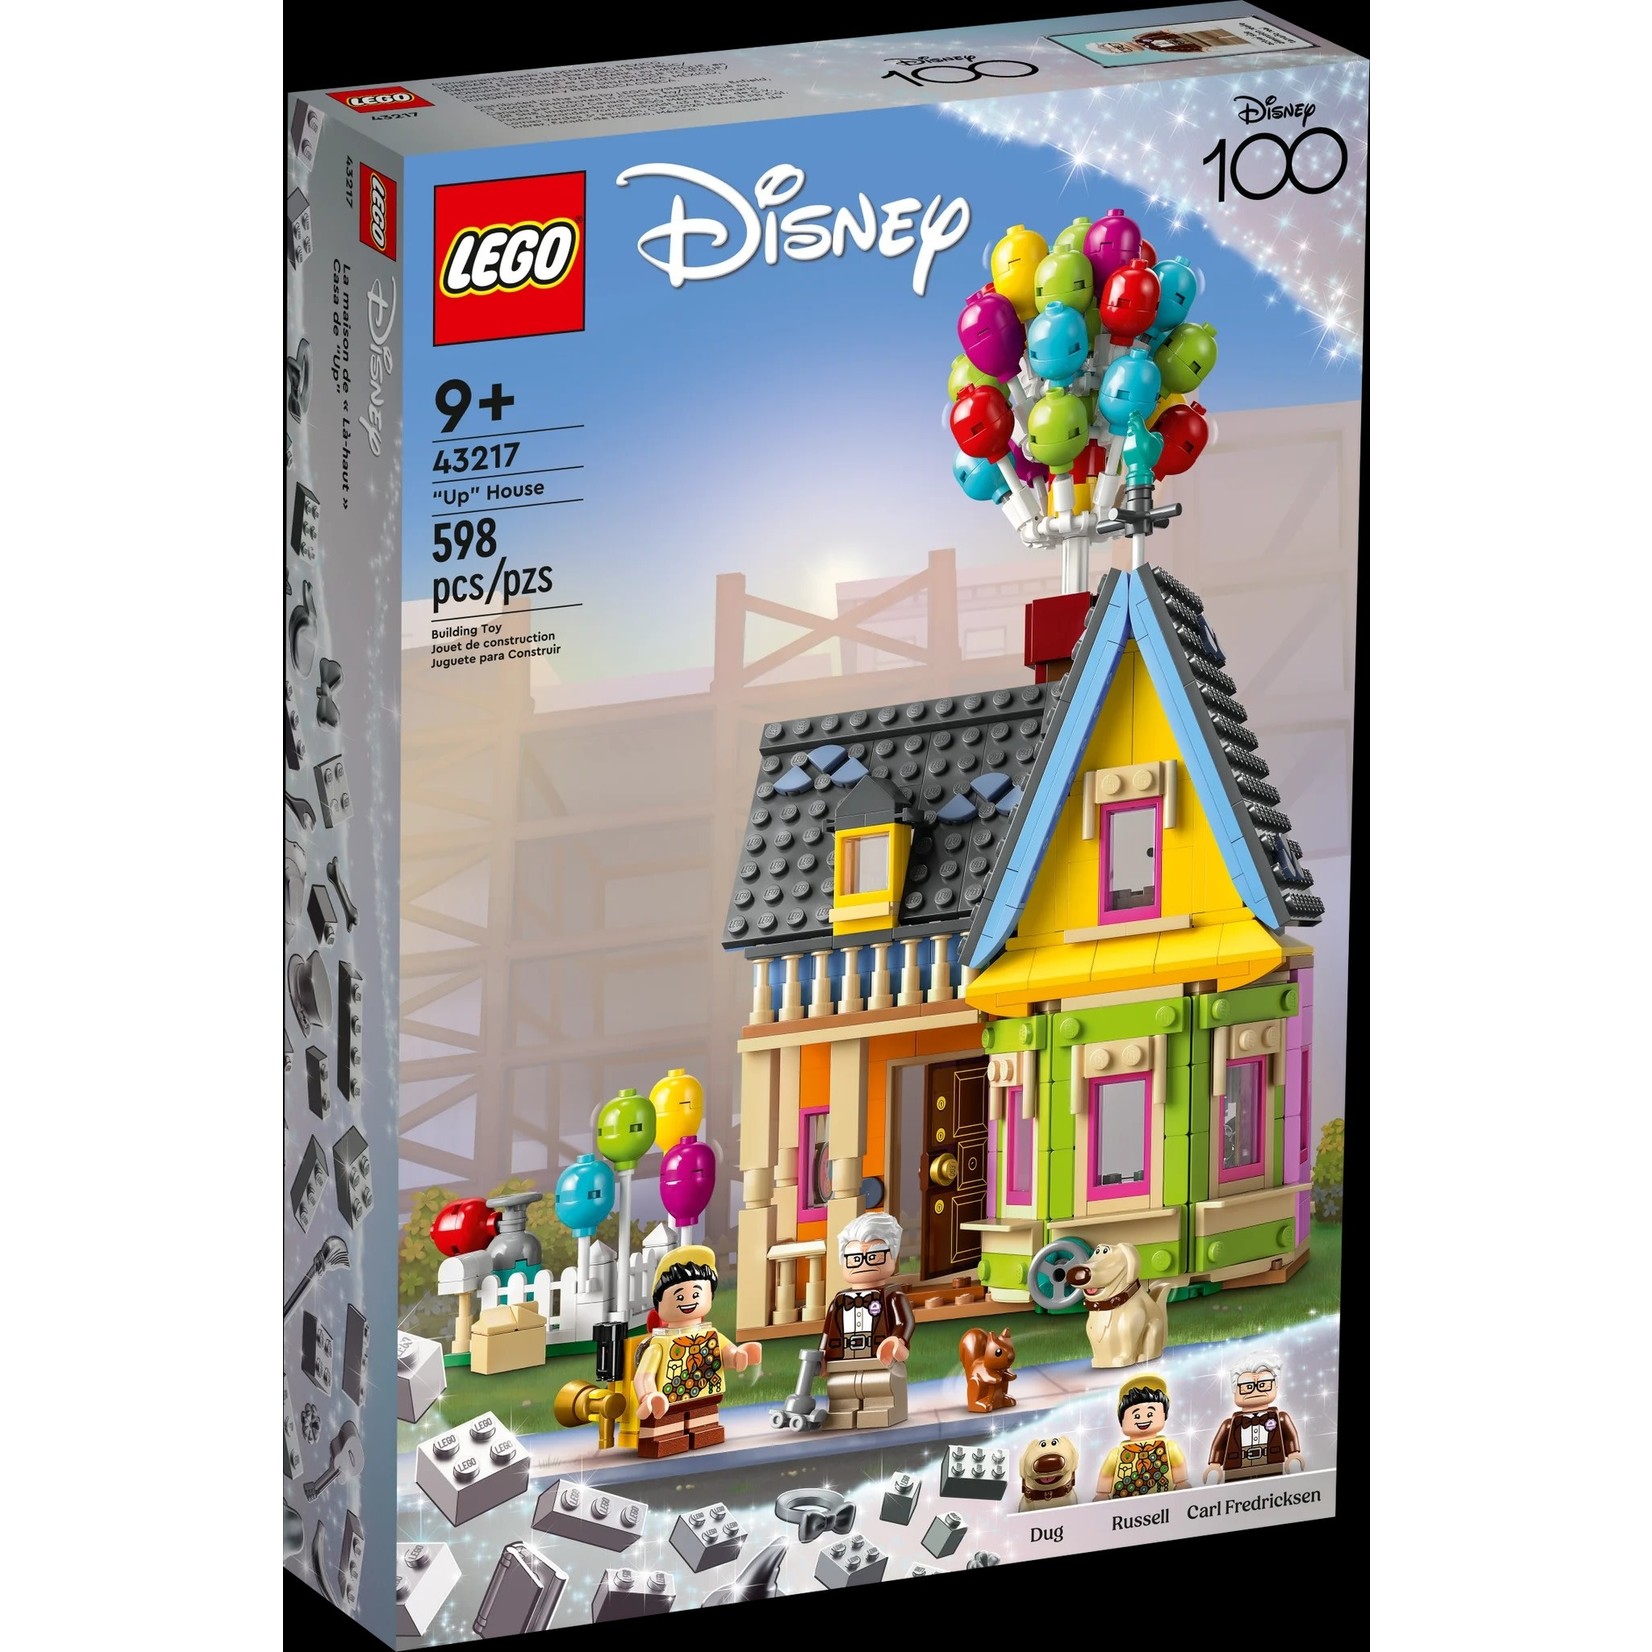 LEGO LEGO Disney and Pixar ‘Up’ House 43217